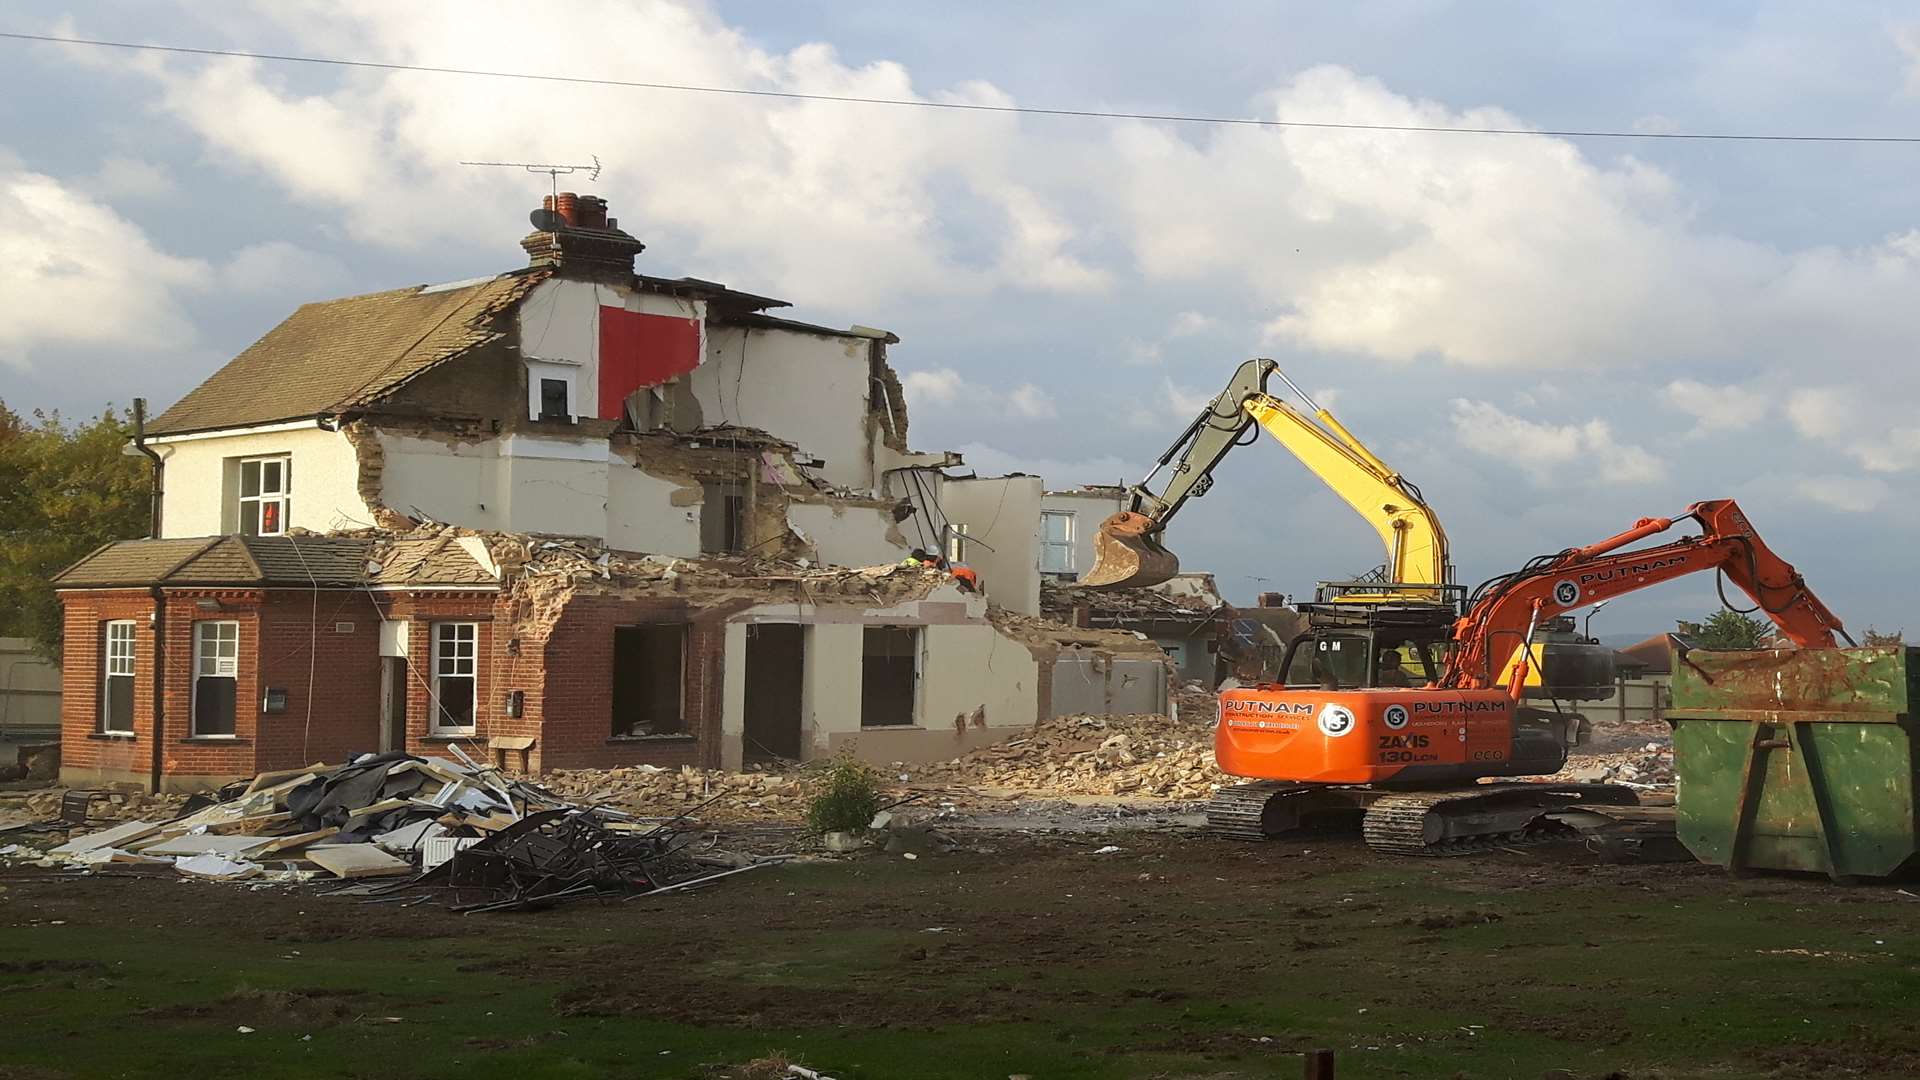 The unauthorised demolition at the pub